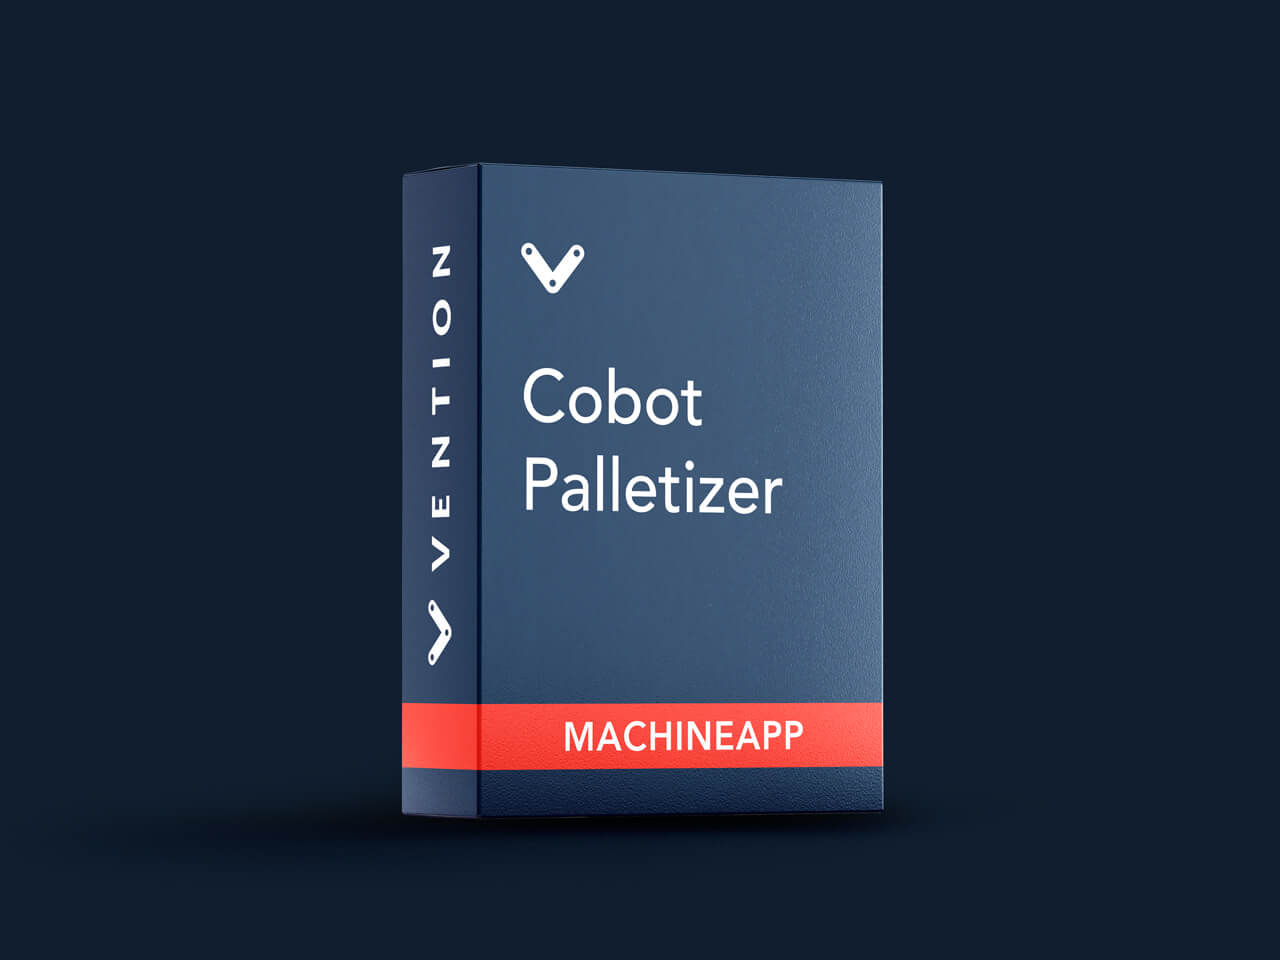 Cobot Palletizer